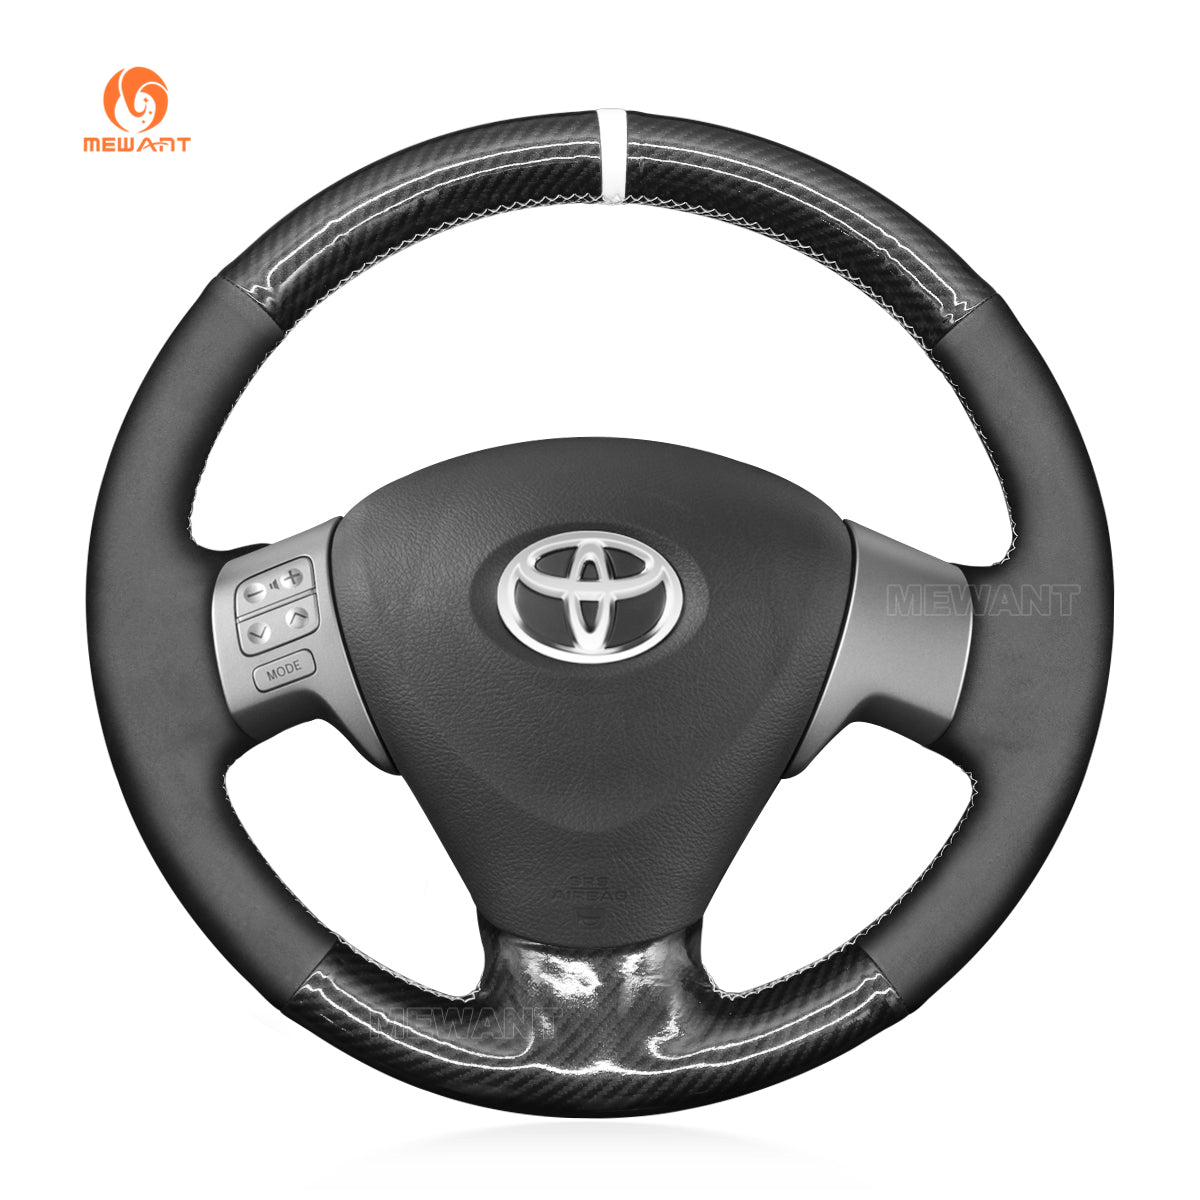 Car steering wheel cover for Toyota Corolla 2006-2010 / Auris 2006-2010 / Isis 2009-2011 / Aygo (UK) 2012-2014 / Ractis 2005-2010 / Matrix 2008-2010 / Sienta 2013-2015 / Noah (Voxy) 2007-2013